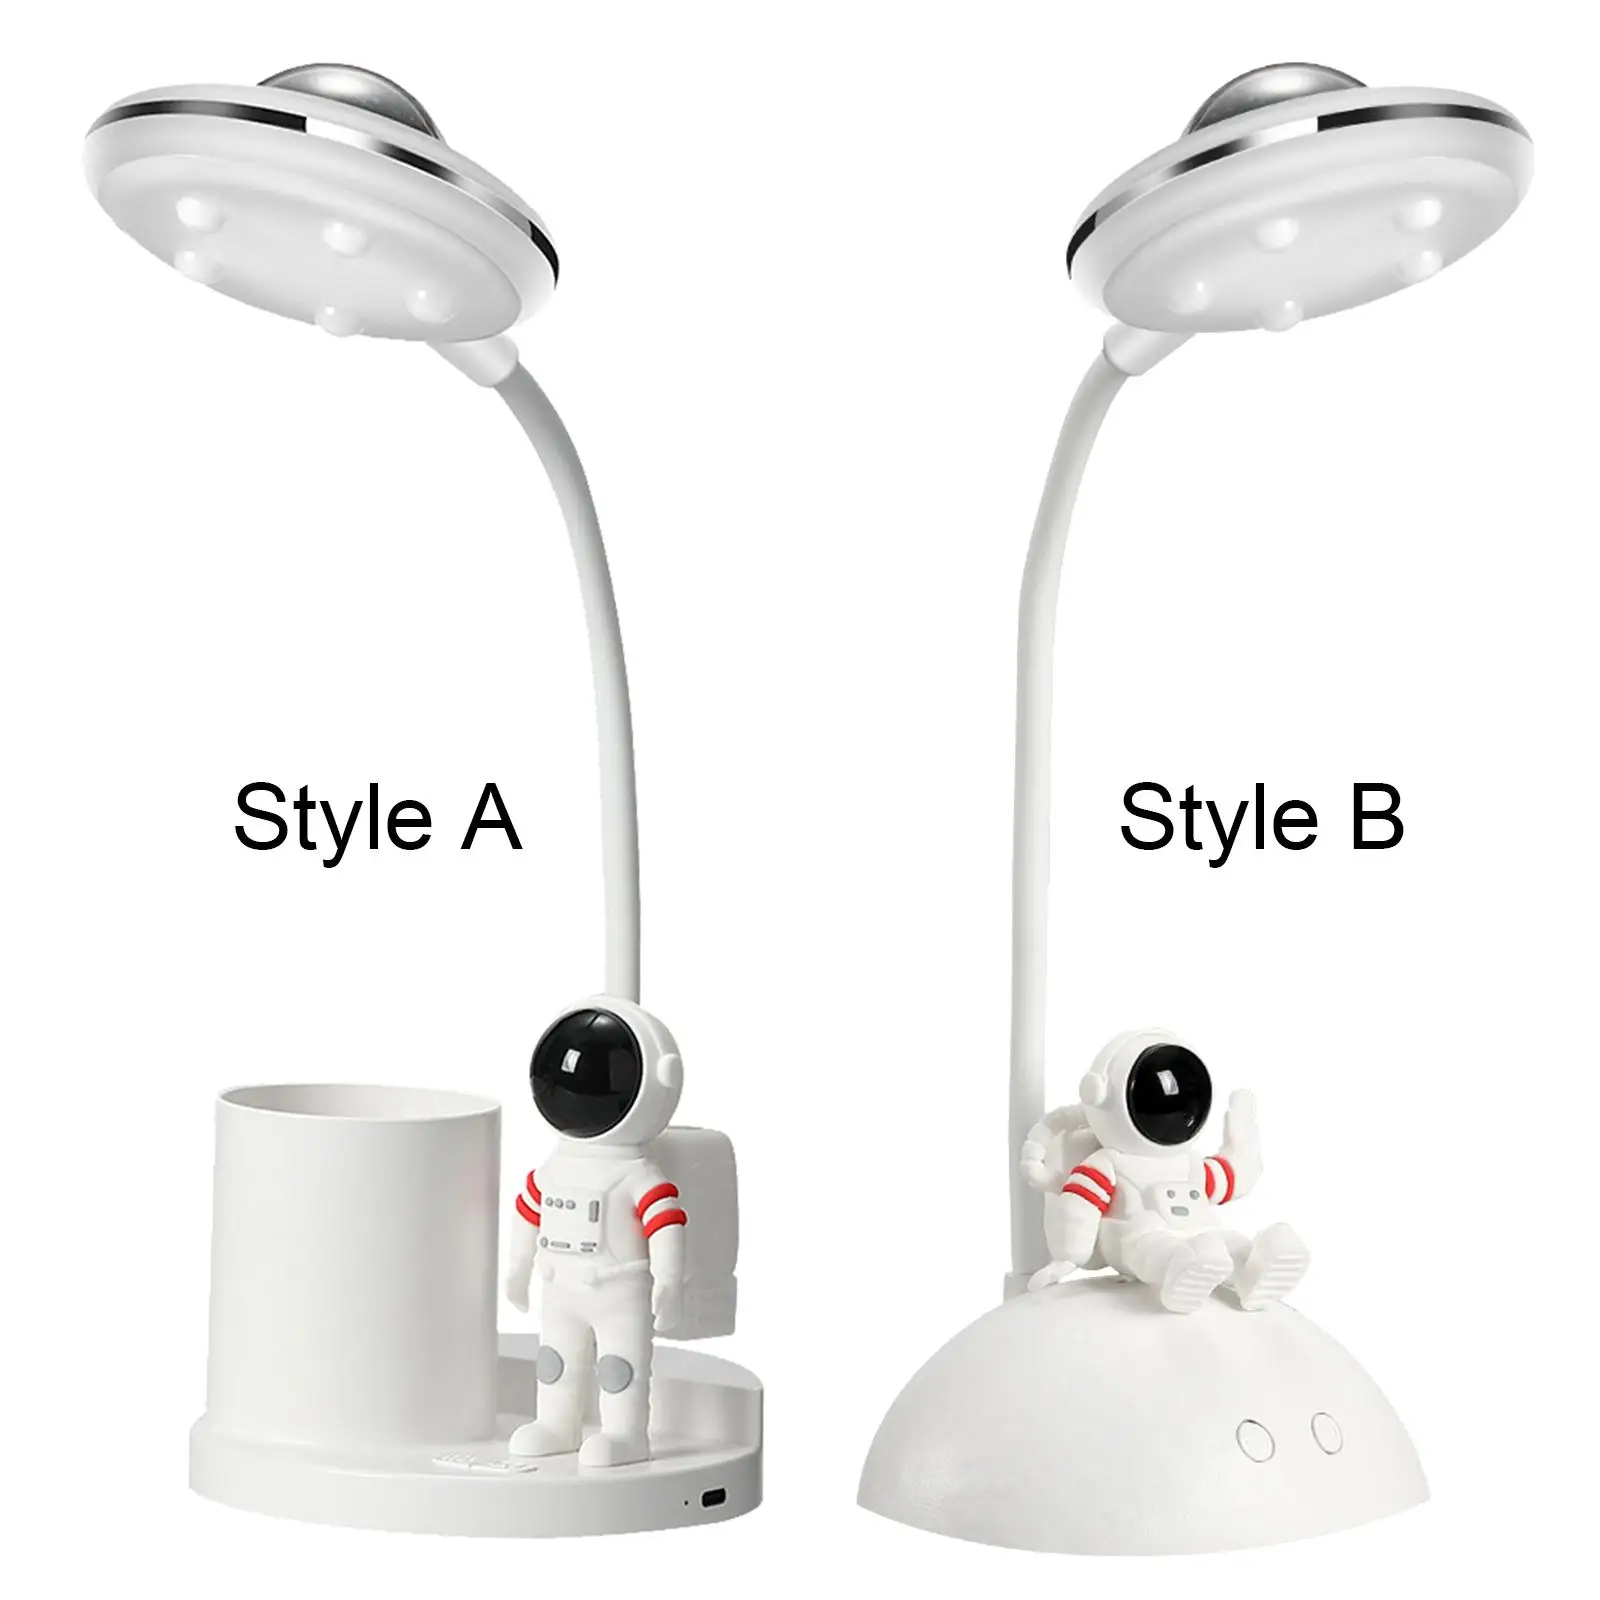 Astronaut Ornament Table Lamp Bendable USB Charging Desk Lamp for Desk Office Desk Table